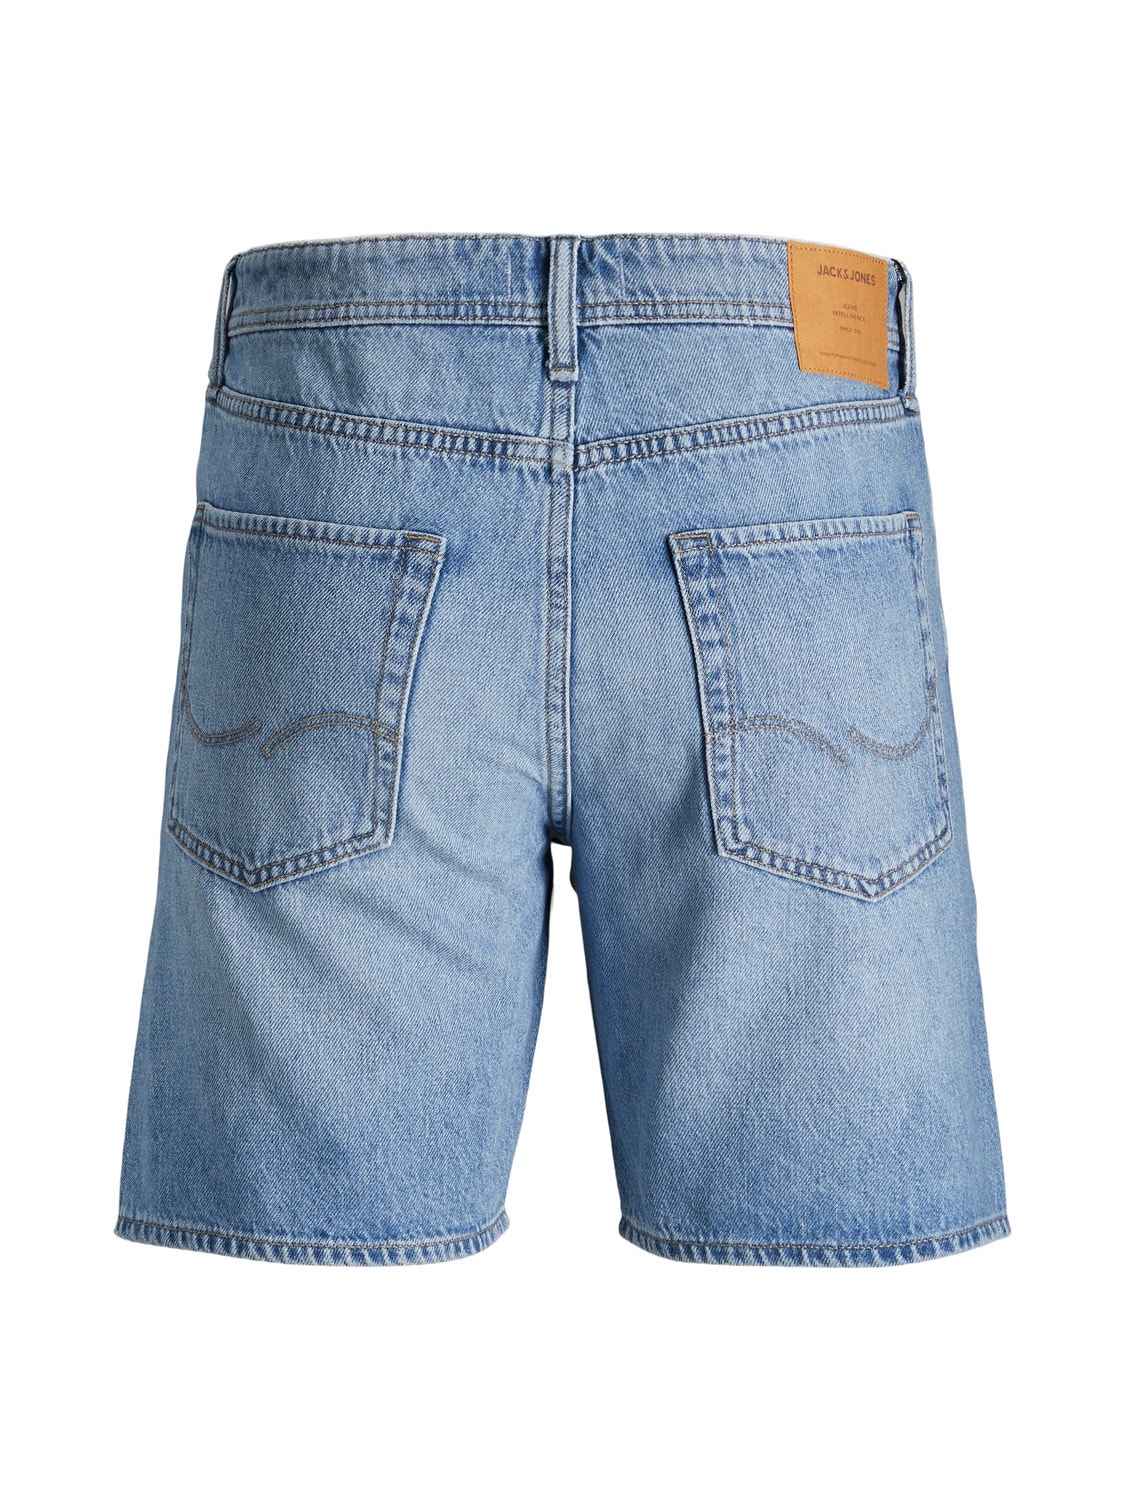 Jack & Jones Relaxed Fit Jeans Shorts -Blue Denim - 12202287